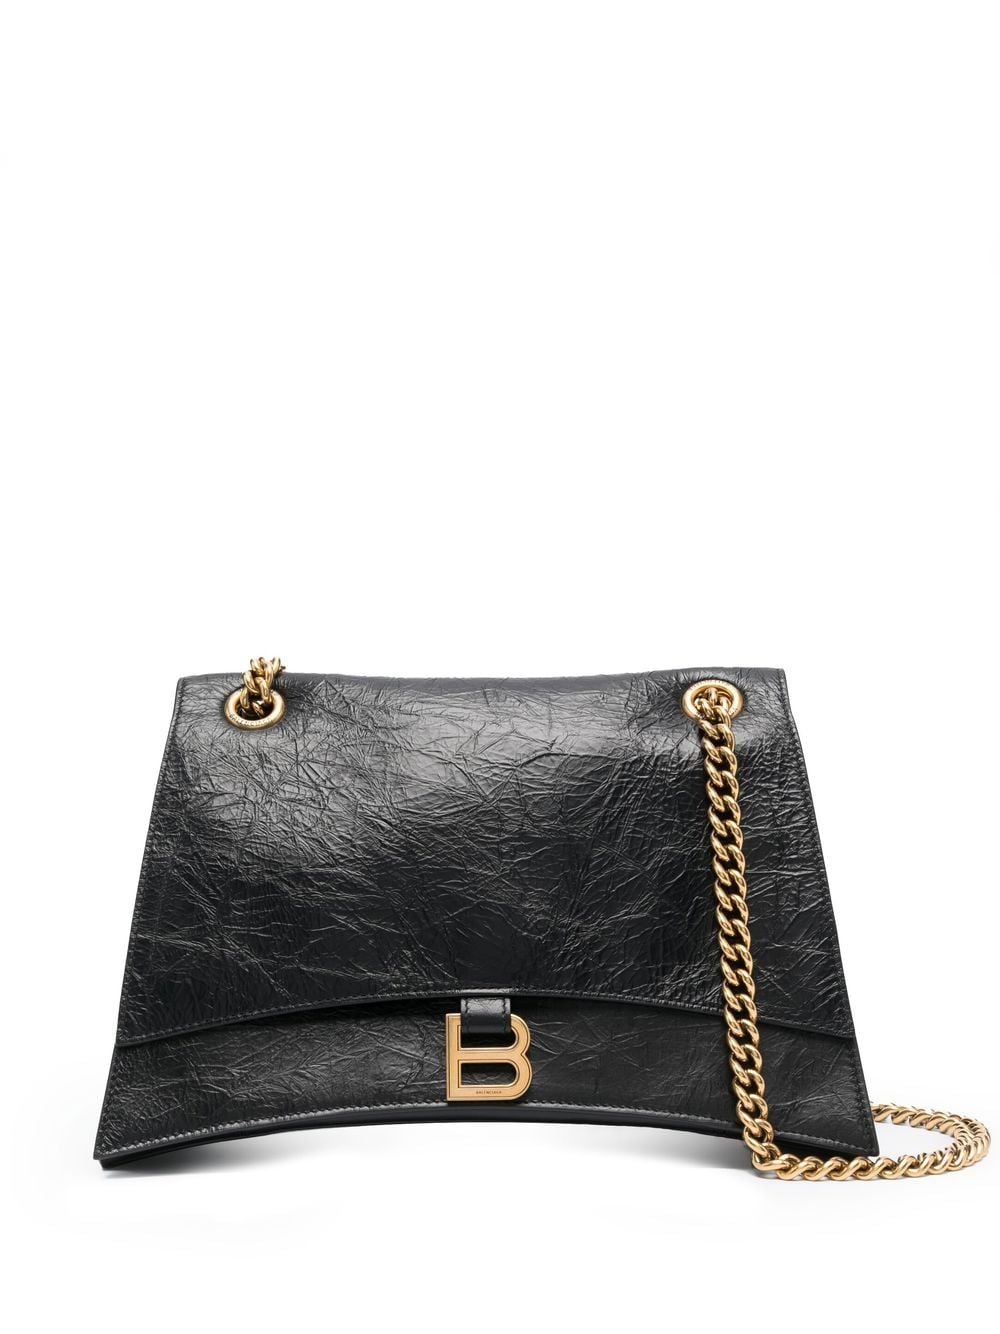 Balenciaga medium Crush shoulder bag - Black